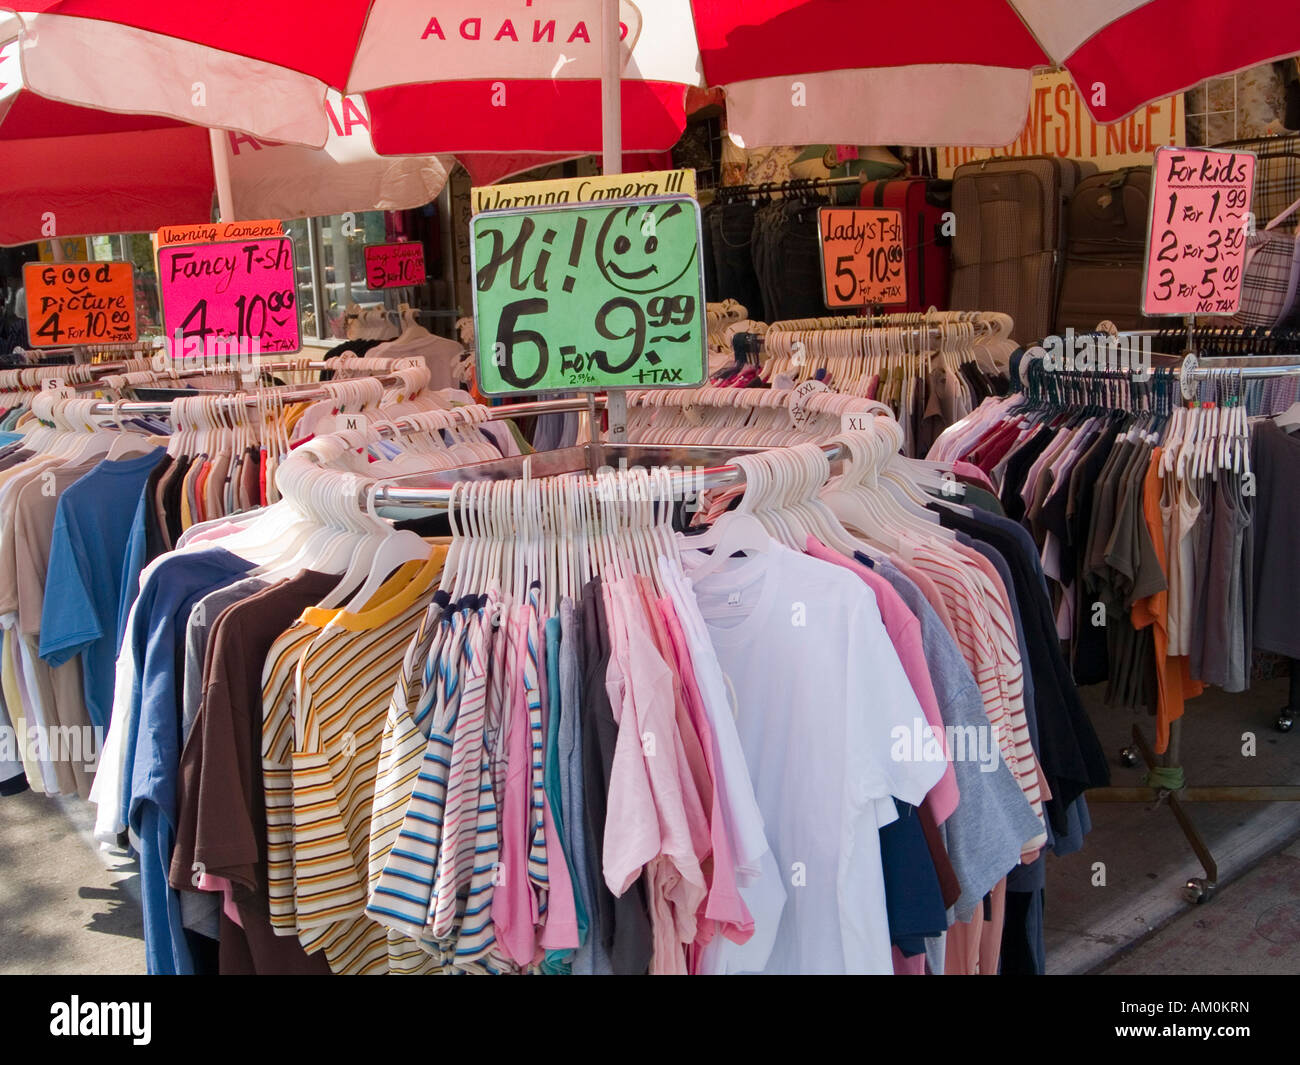 https://c8.alamy.com/comp/AM0KRN/cheap-t-shirts-for-sale-outside-a-clothing-store-in-the-kensington-AM0KRN.jpg